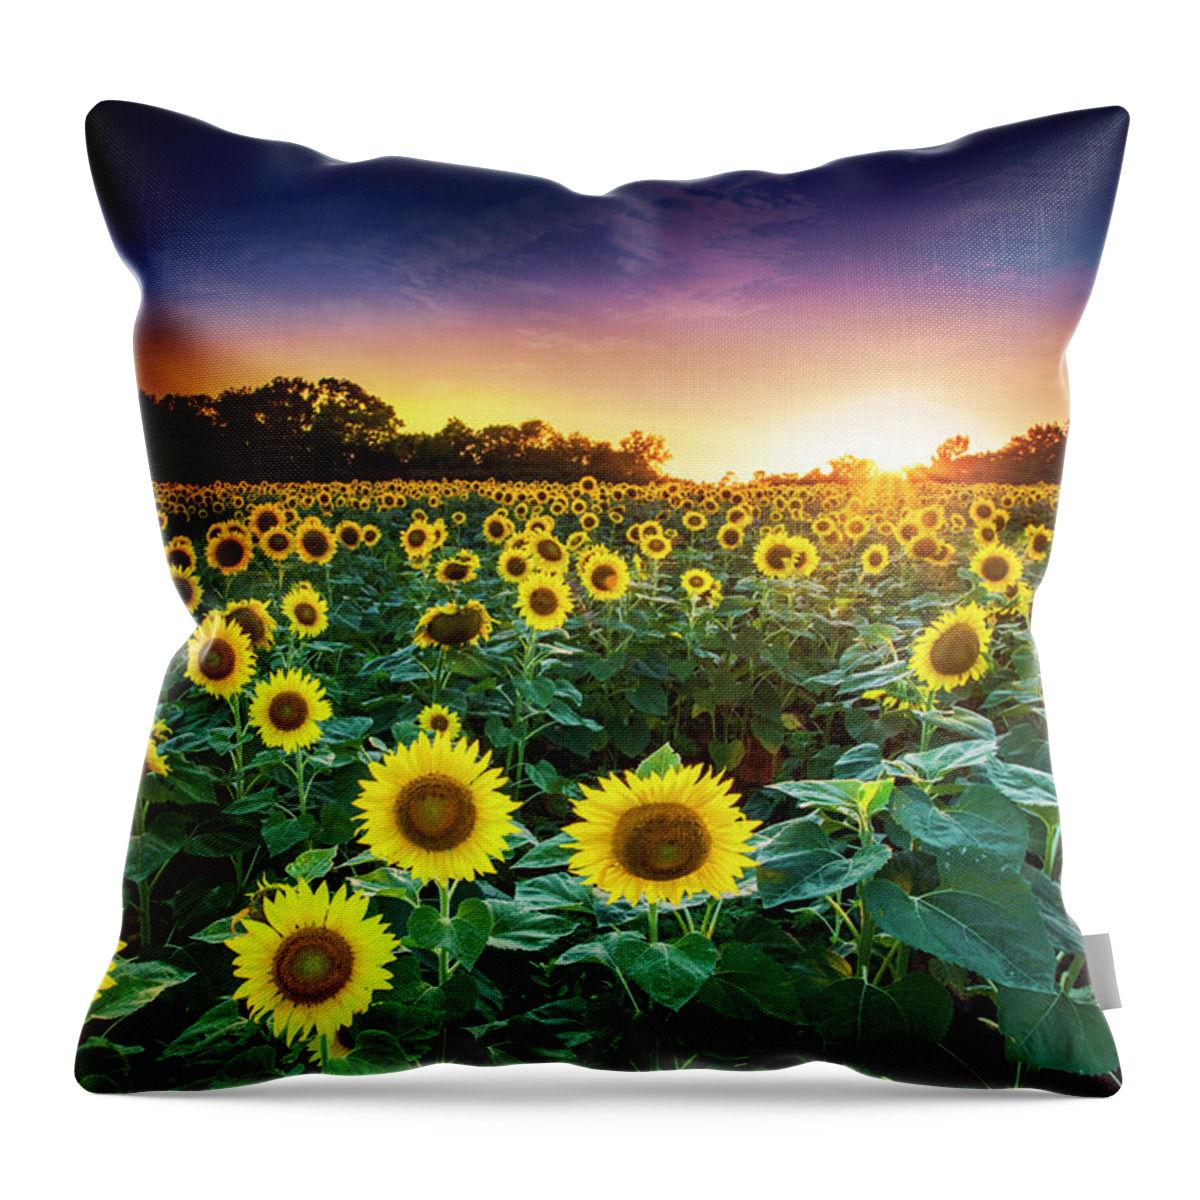 Sunset Throw Pillow featuring the photograph 3 Suns by Edward Kreis